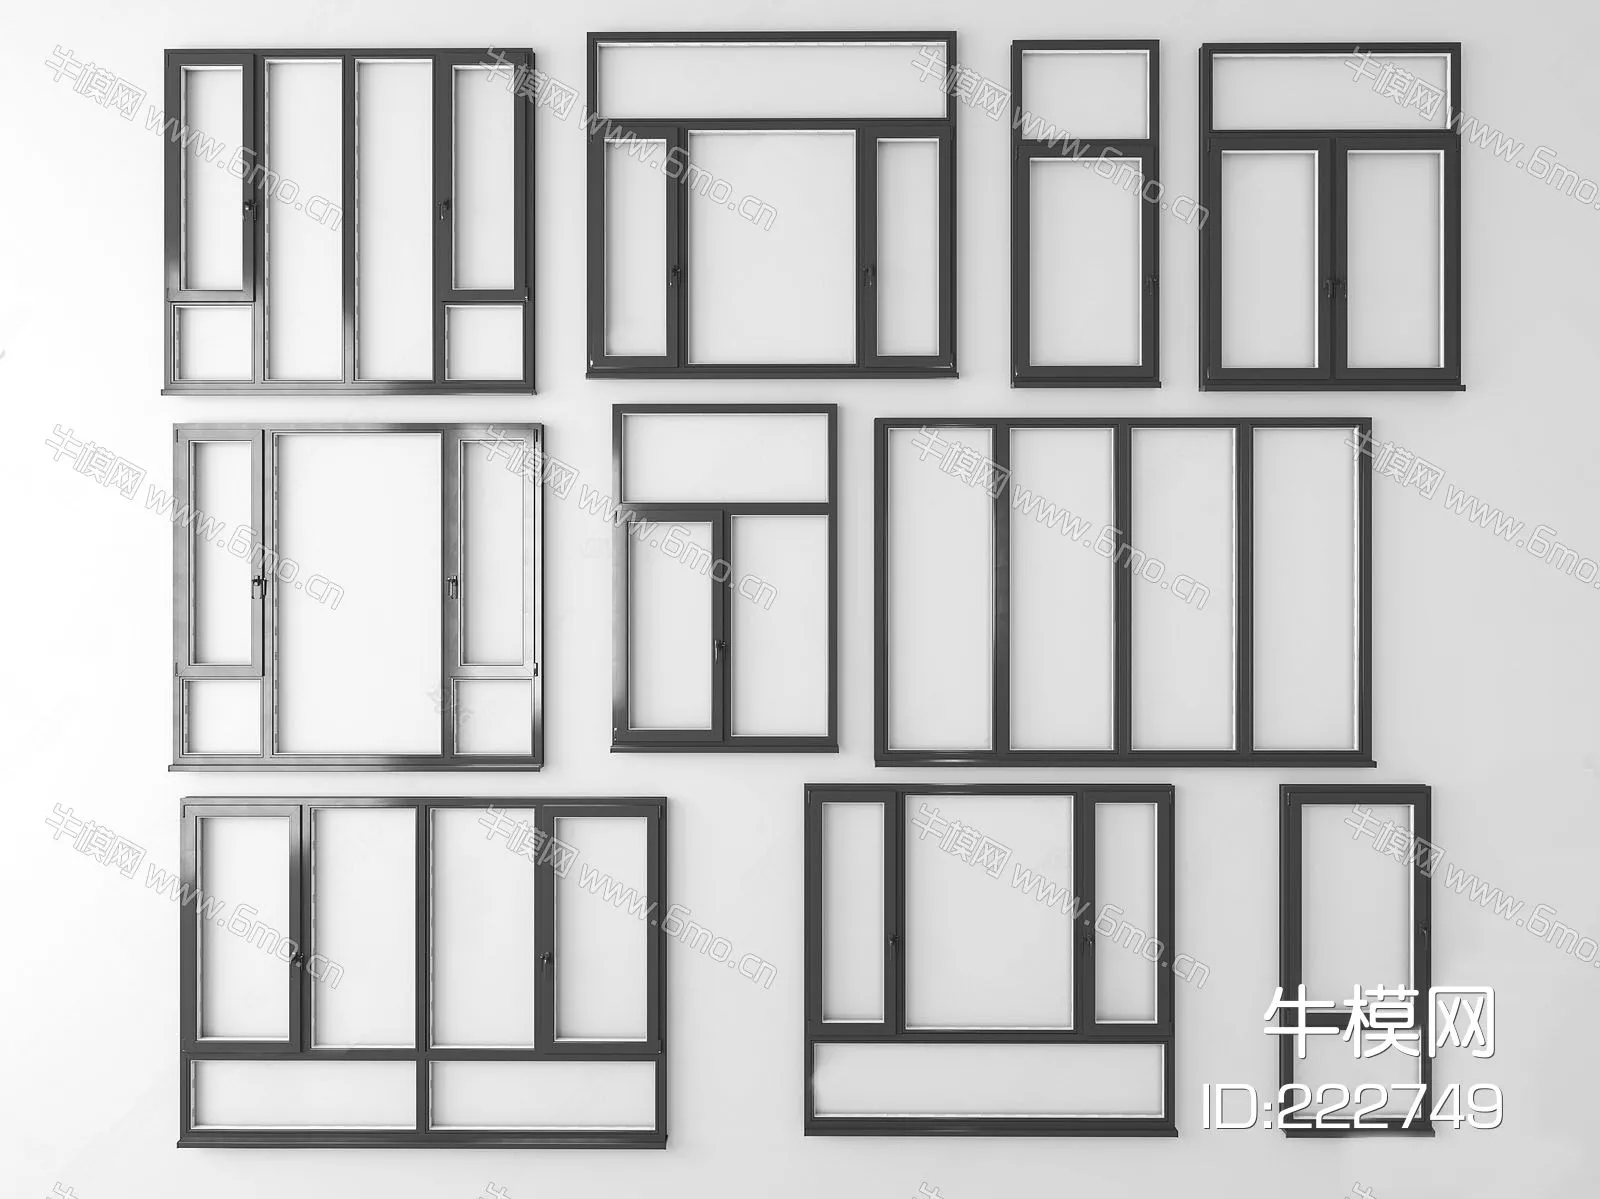 MODERN DOOR AND WINDOWS - SKETCHUP 3D MODEL - ENSCAPE - 222749